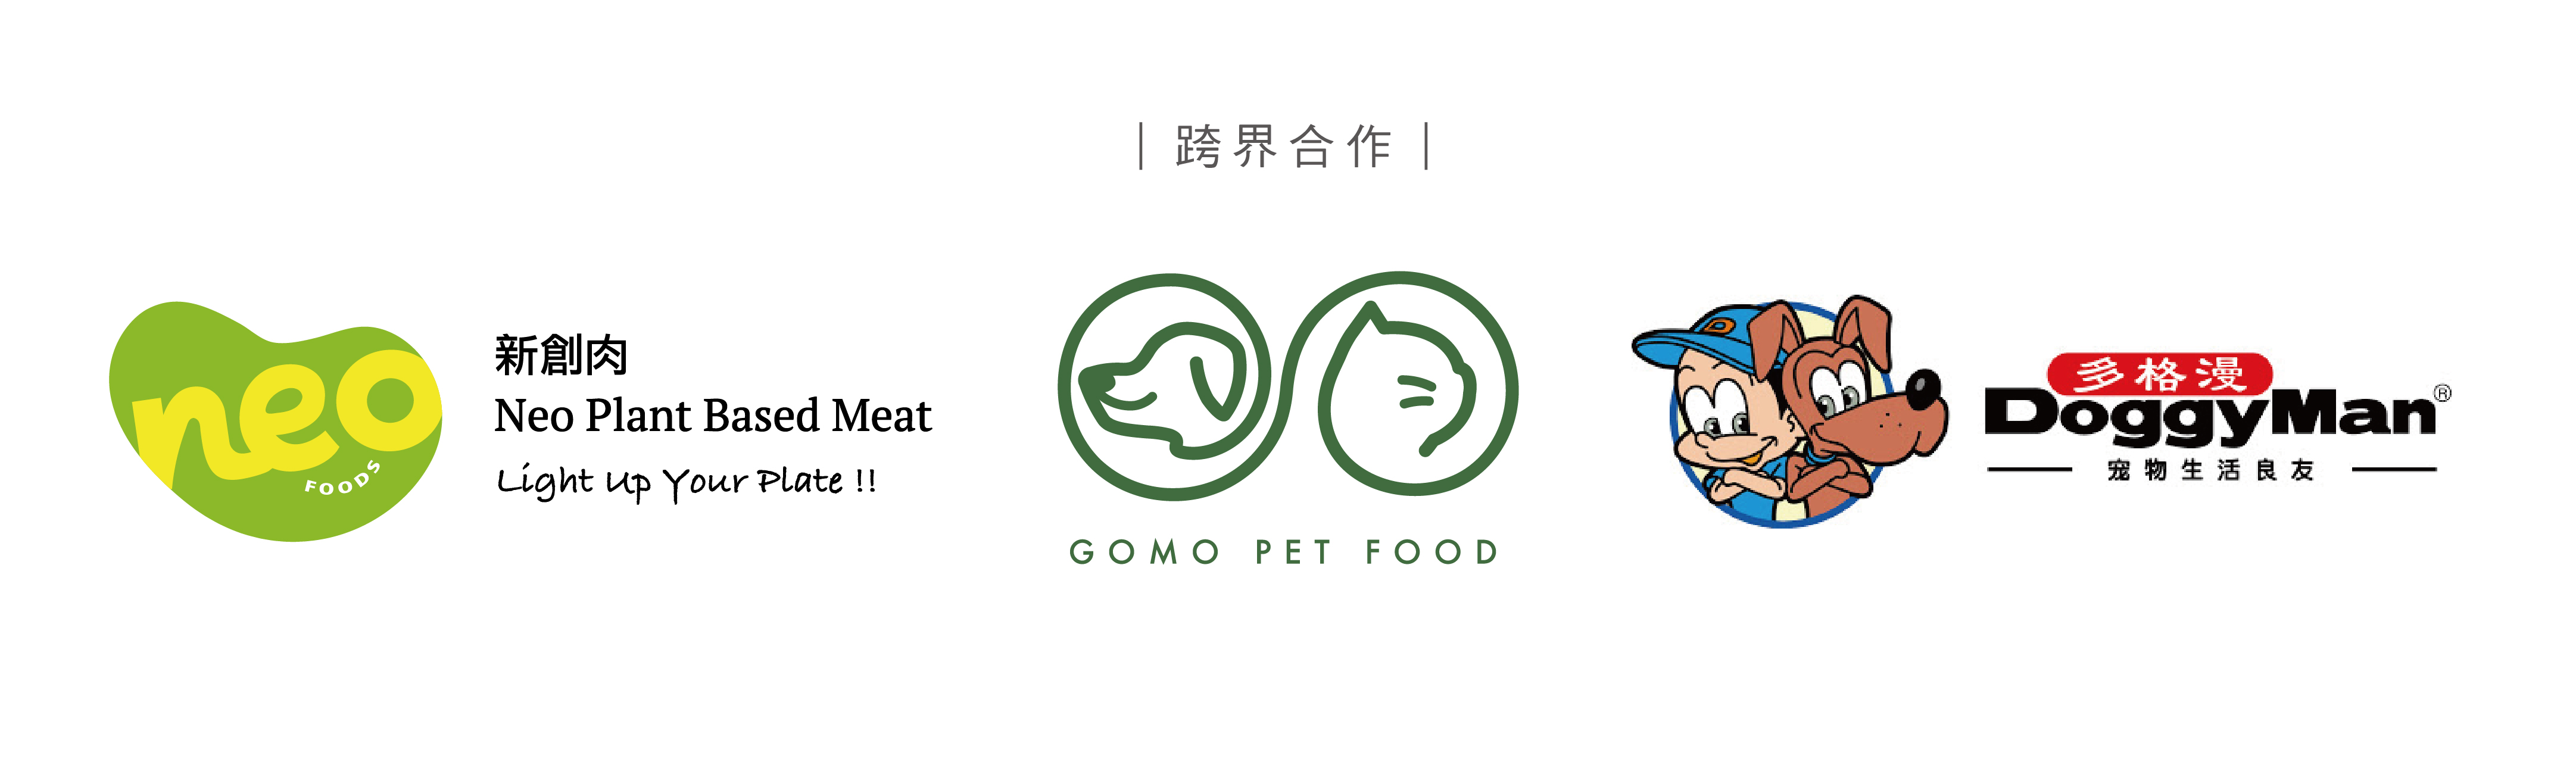 GOMO PET FOOD寵物貓犬食品歡迎跨界，攜手成長。